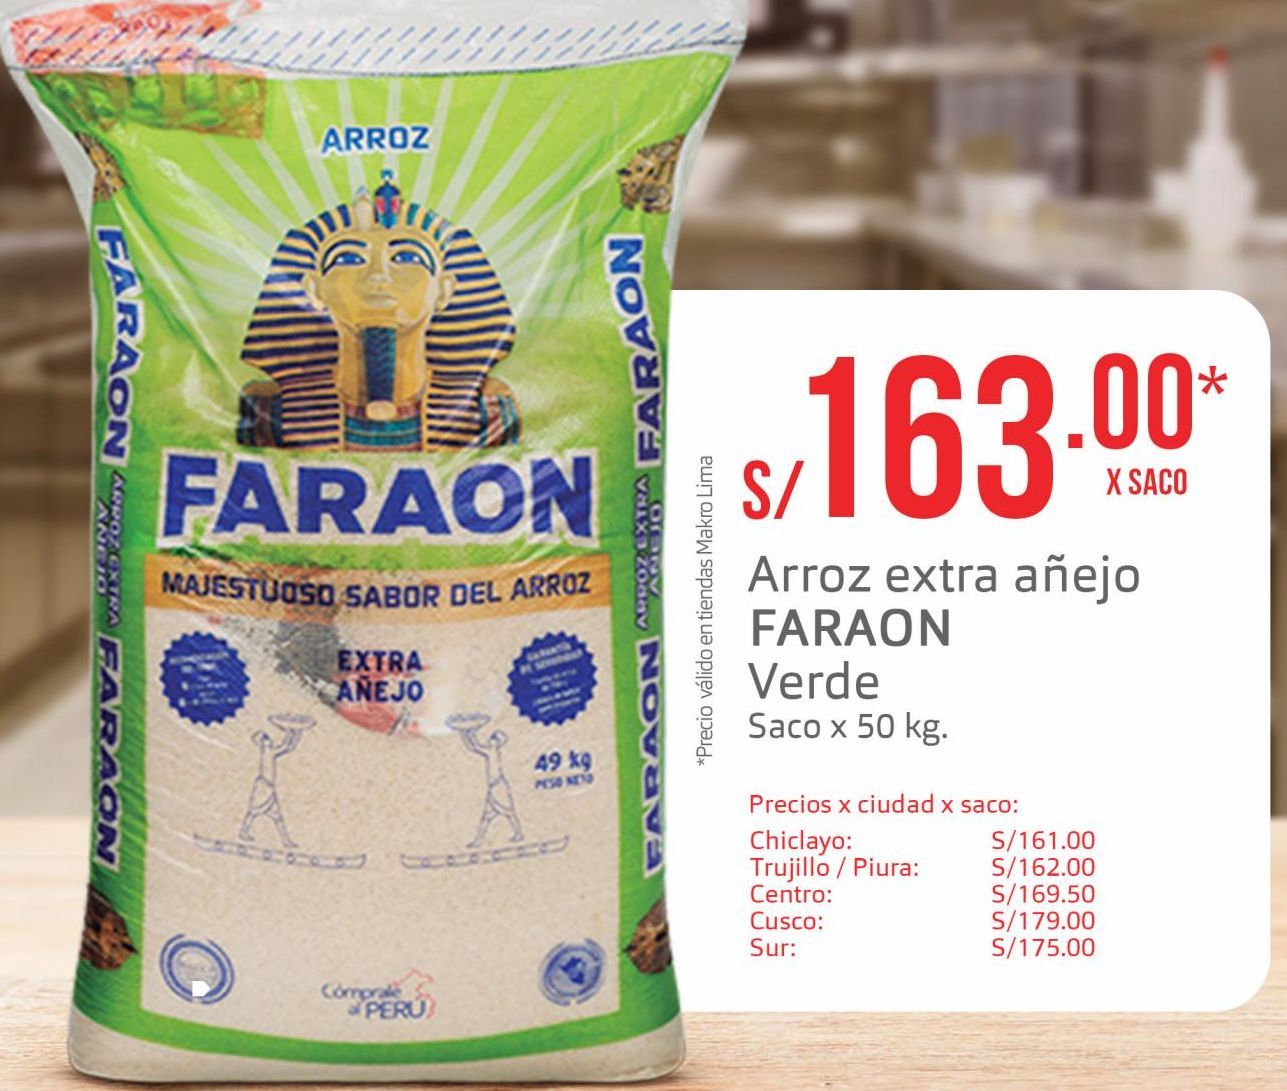 Oferta de Arroz extra añejo Faraon verde saco de 50kg por S/ 163